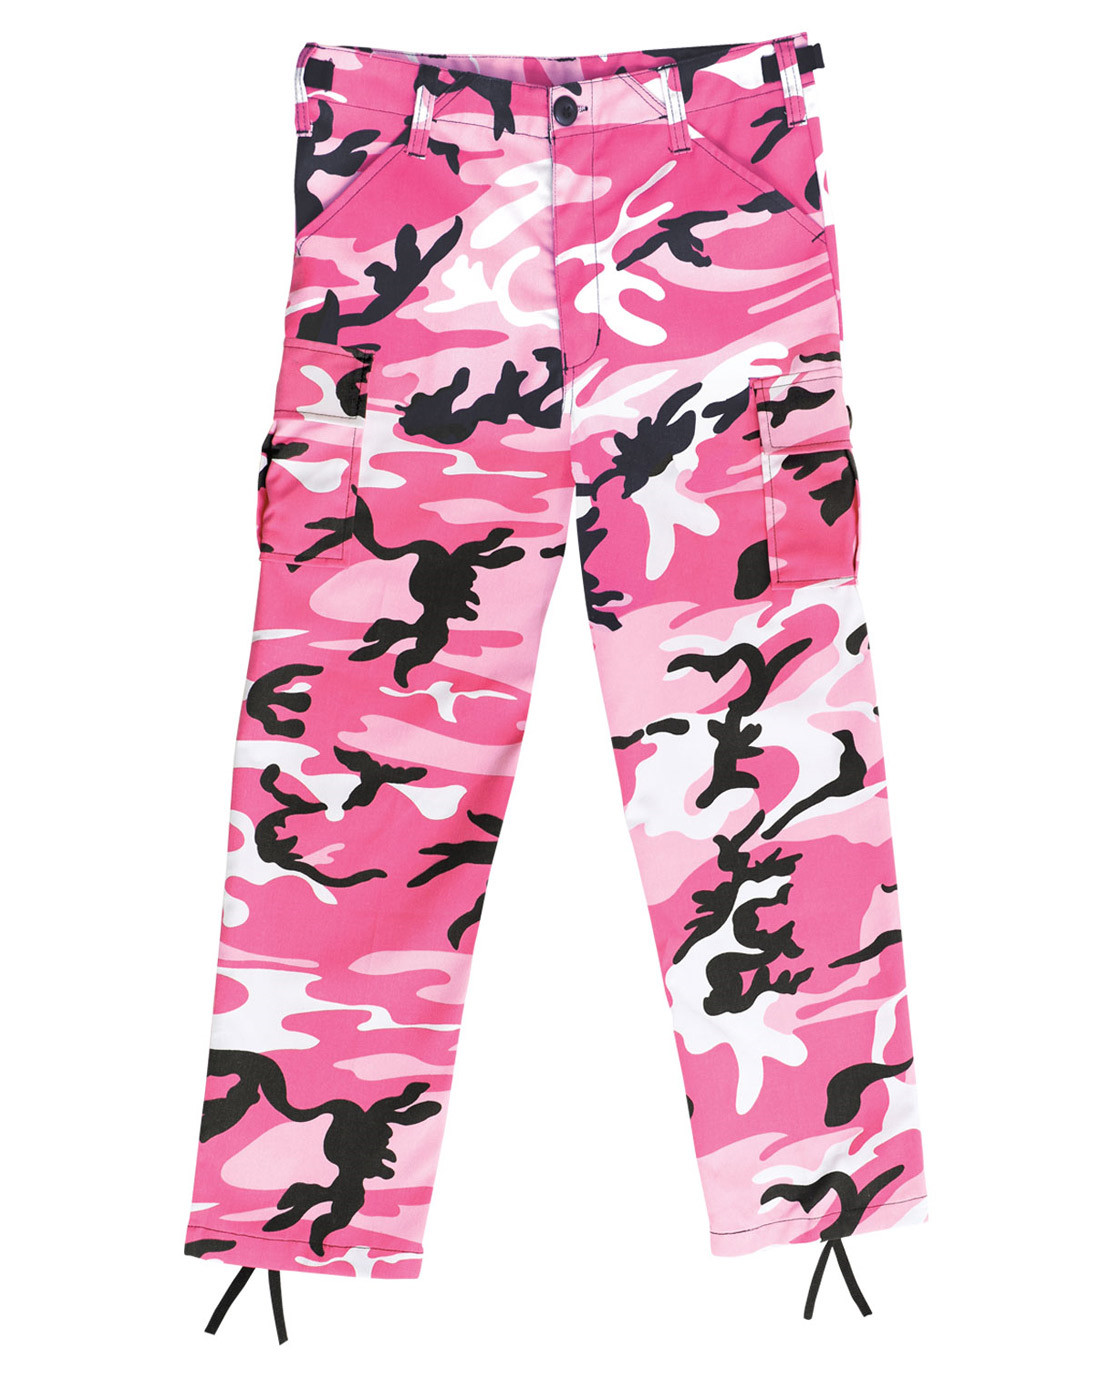 Rothco Army Bukser til Børn (Pink Camo, L)